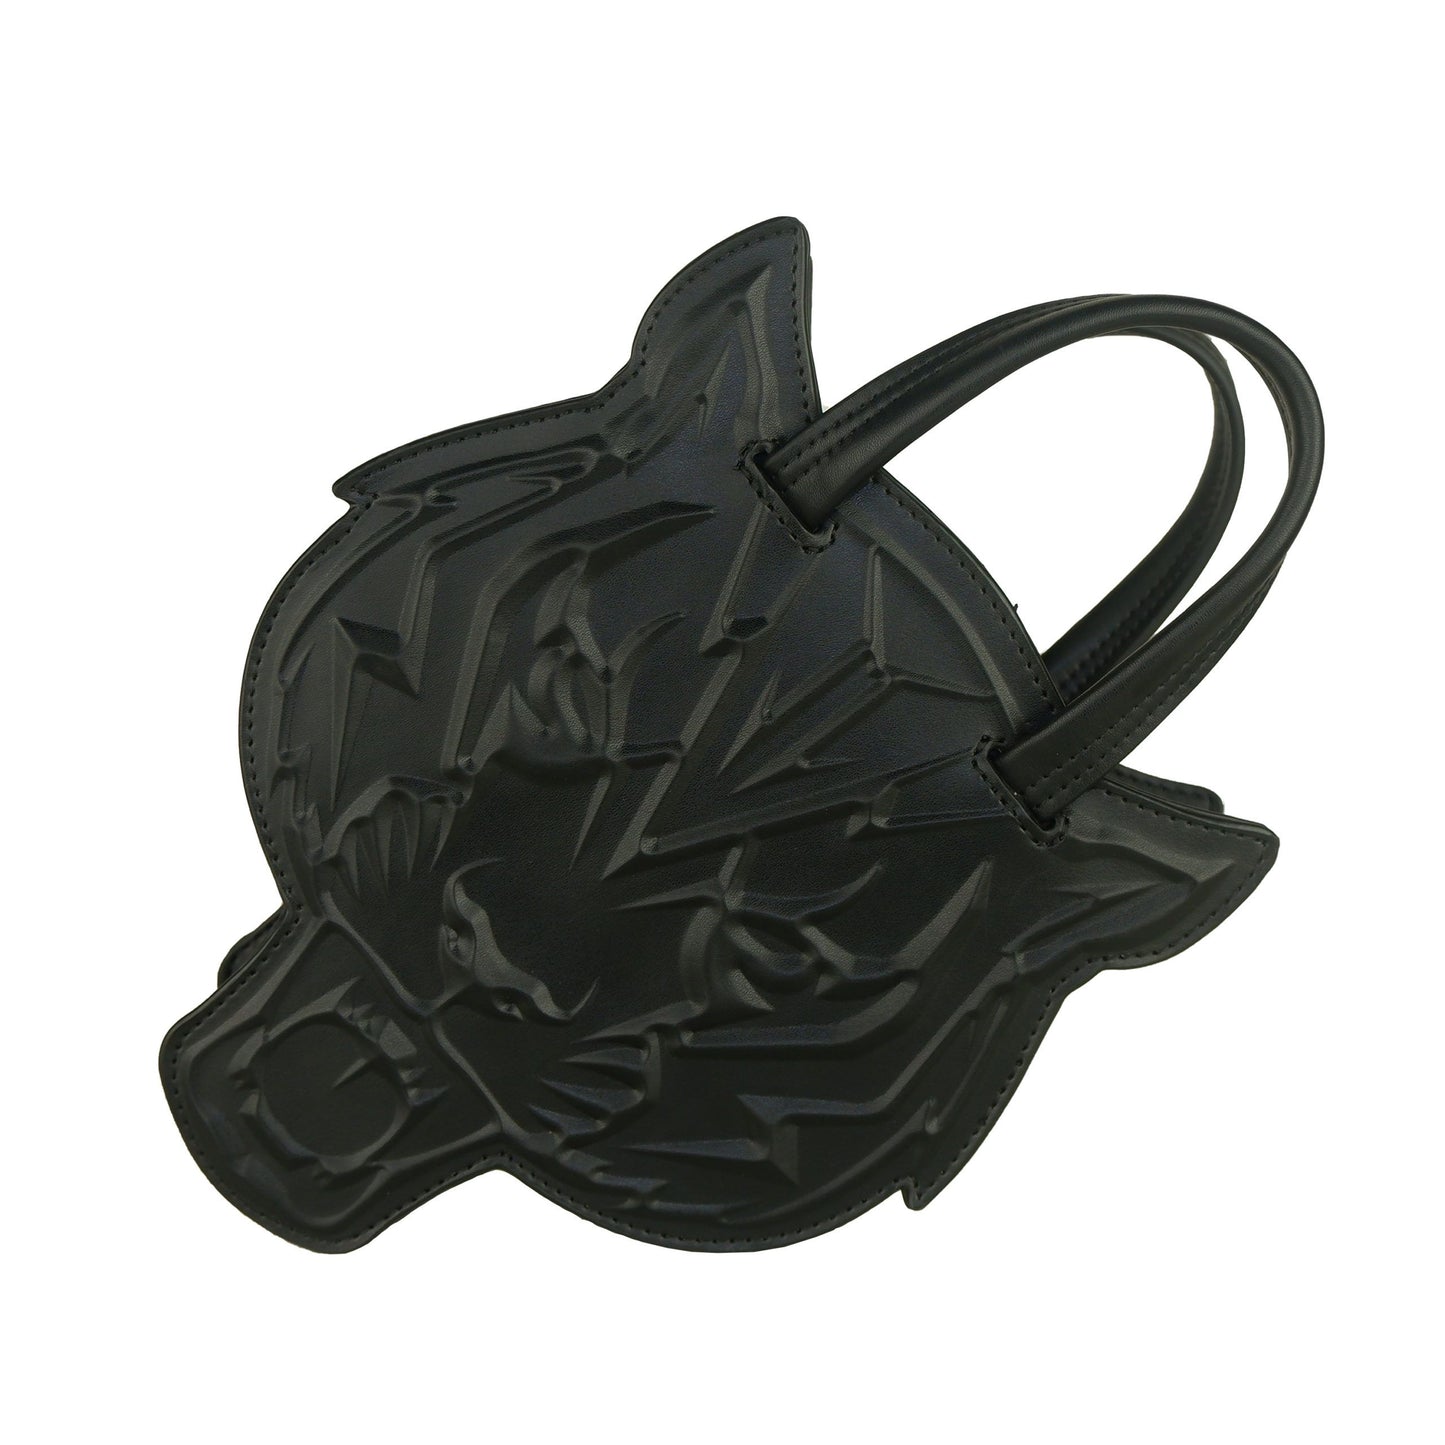 Fierce Tiger Crossbody Bag - Sleek, Compact Style